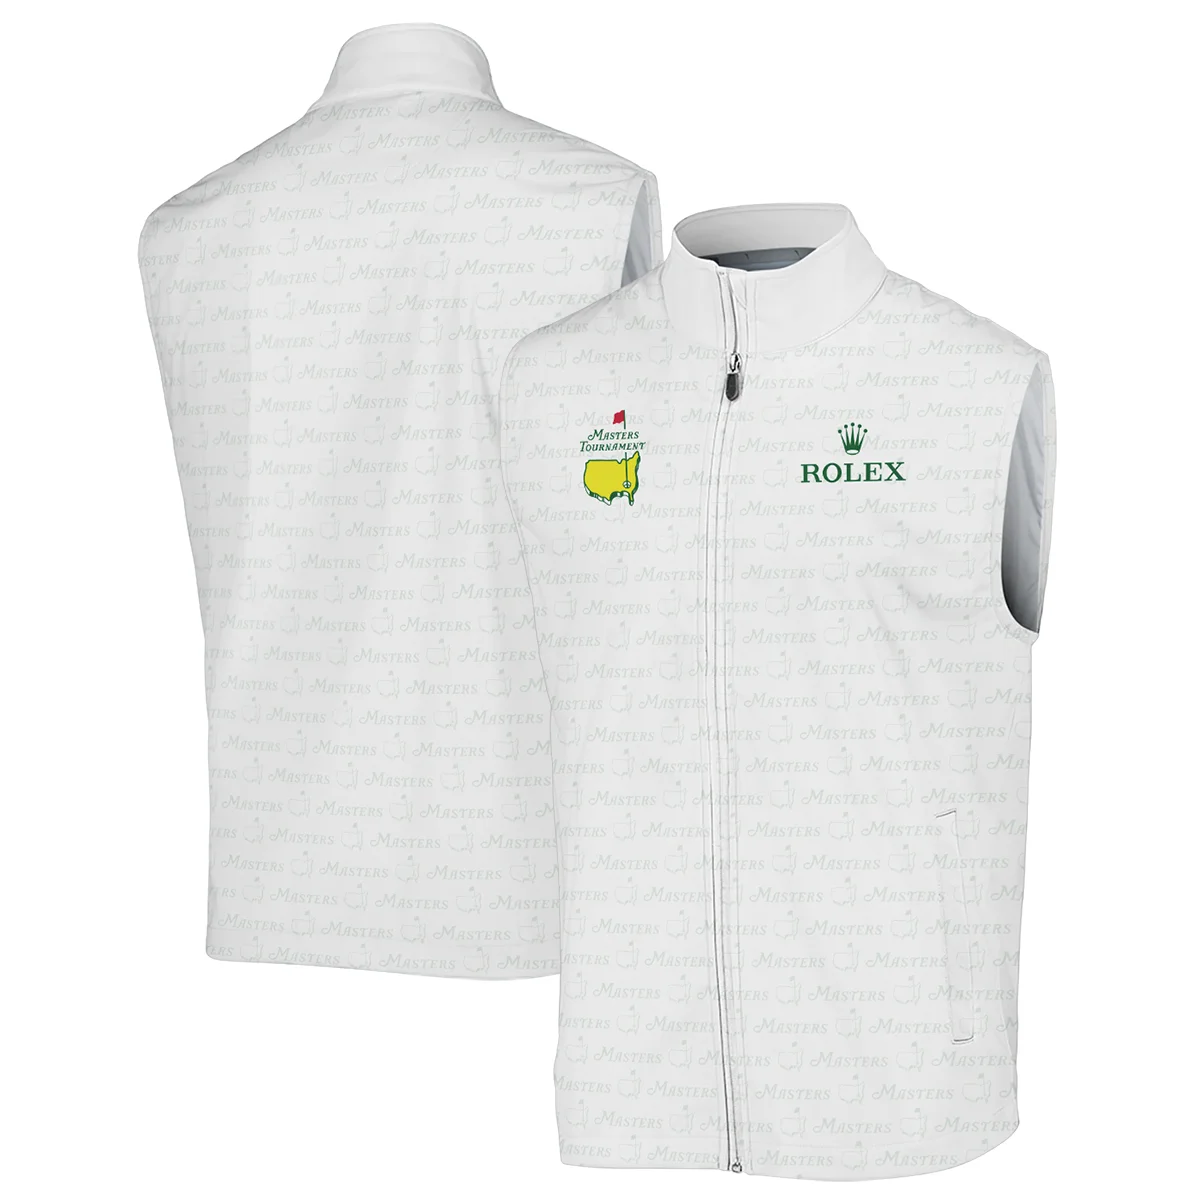 Golf Pattern Cup White Mix Green Masters Tournament Rolex Zipper Polo Shirt Style Classic Zipper Polo Shirt For Men